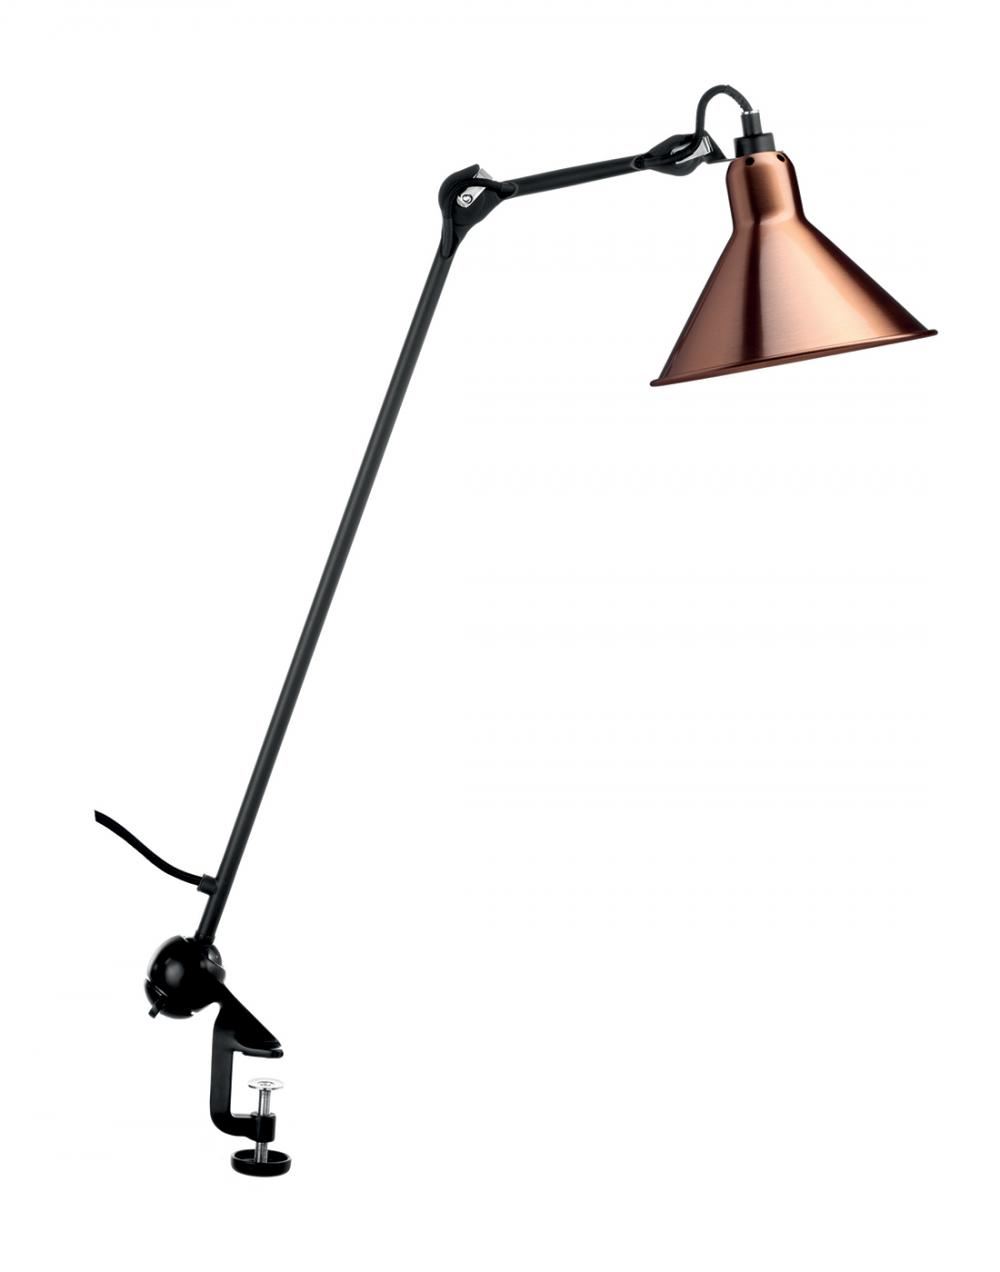 Lampe Gras 201 Architect Lamp Copper Shade With White Interior Conic